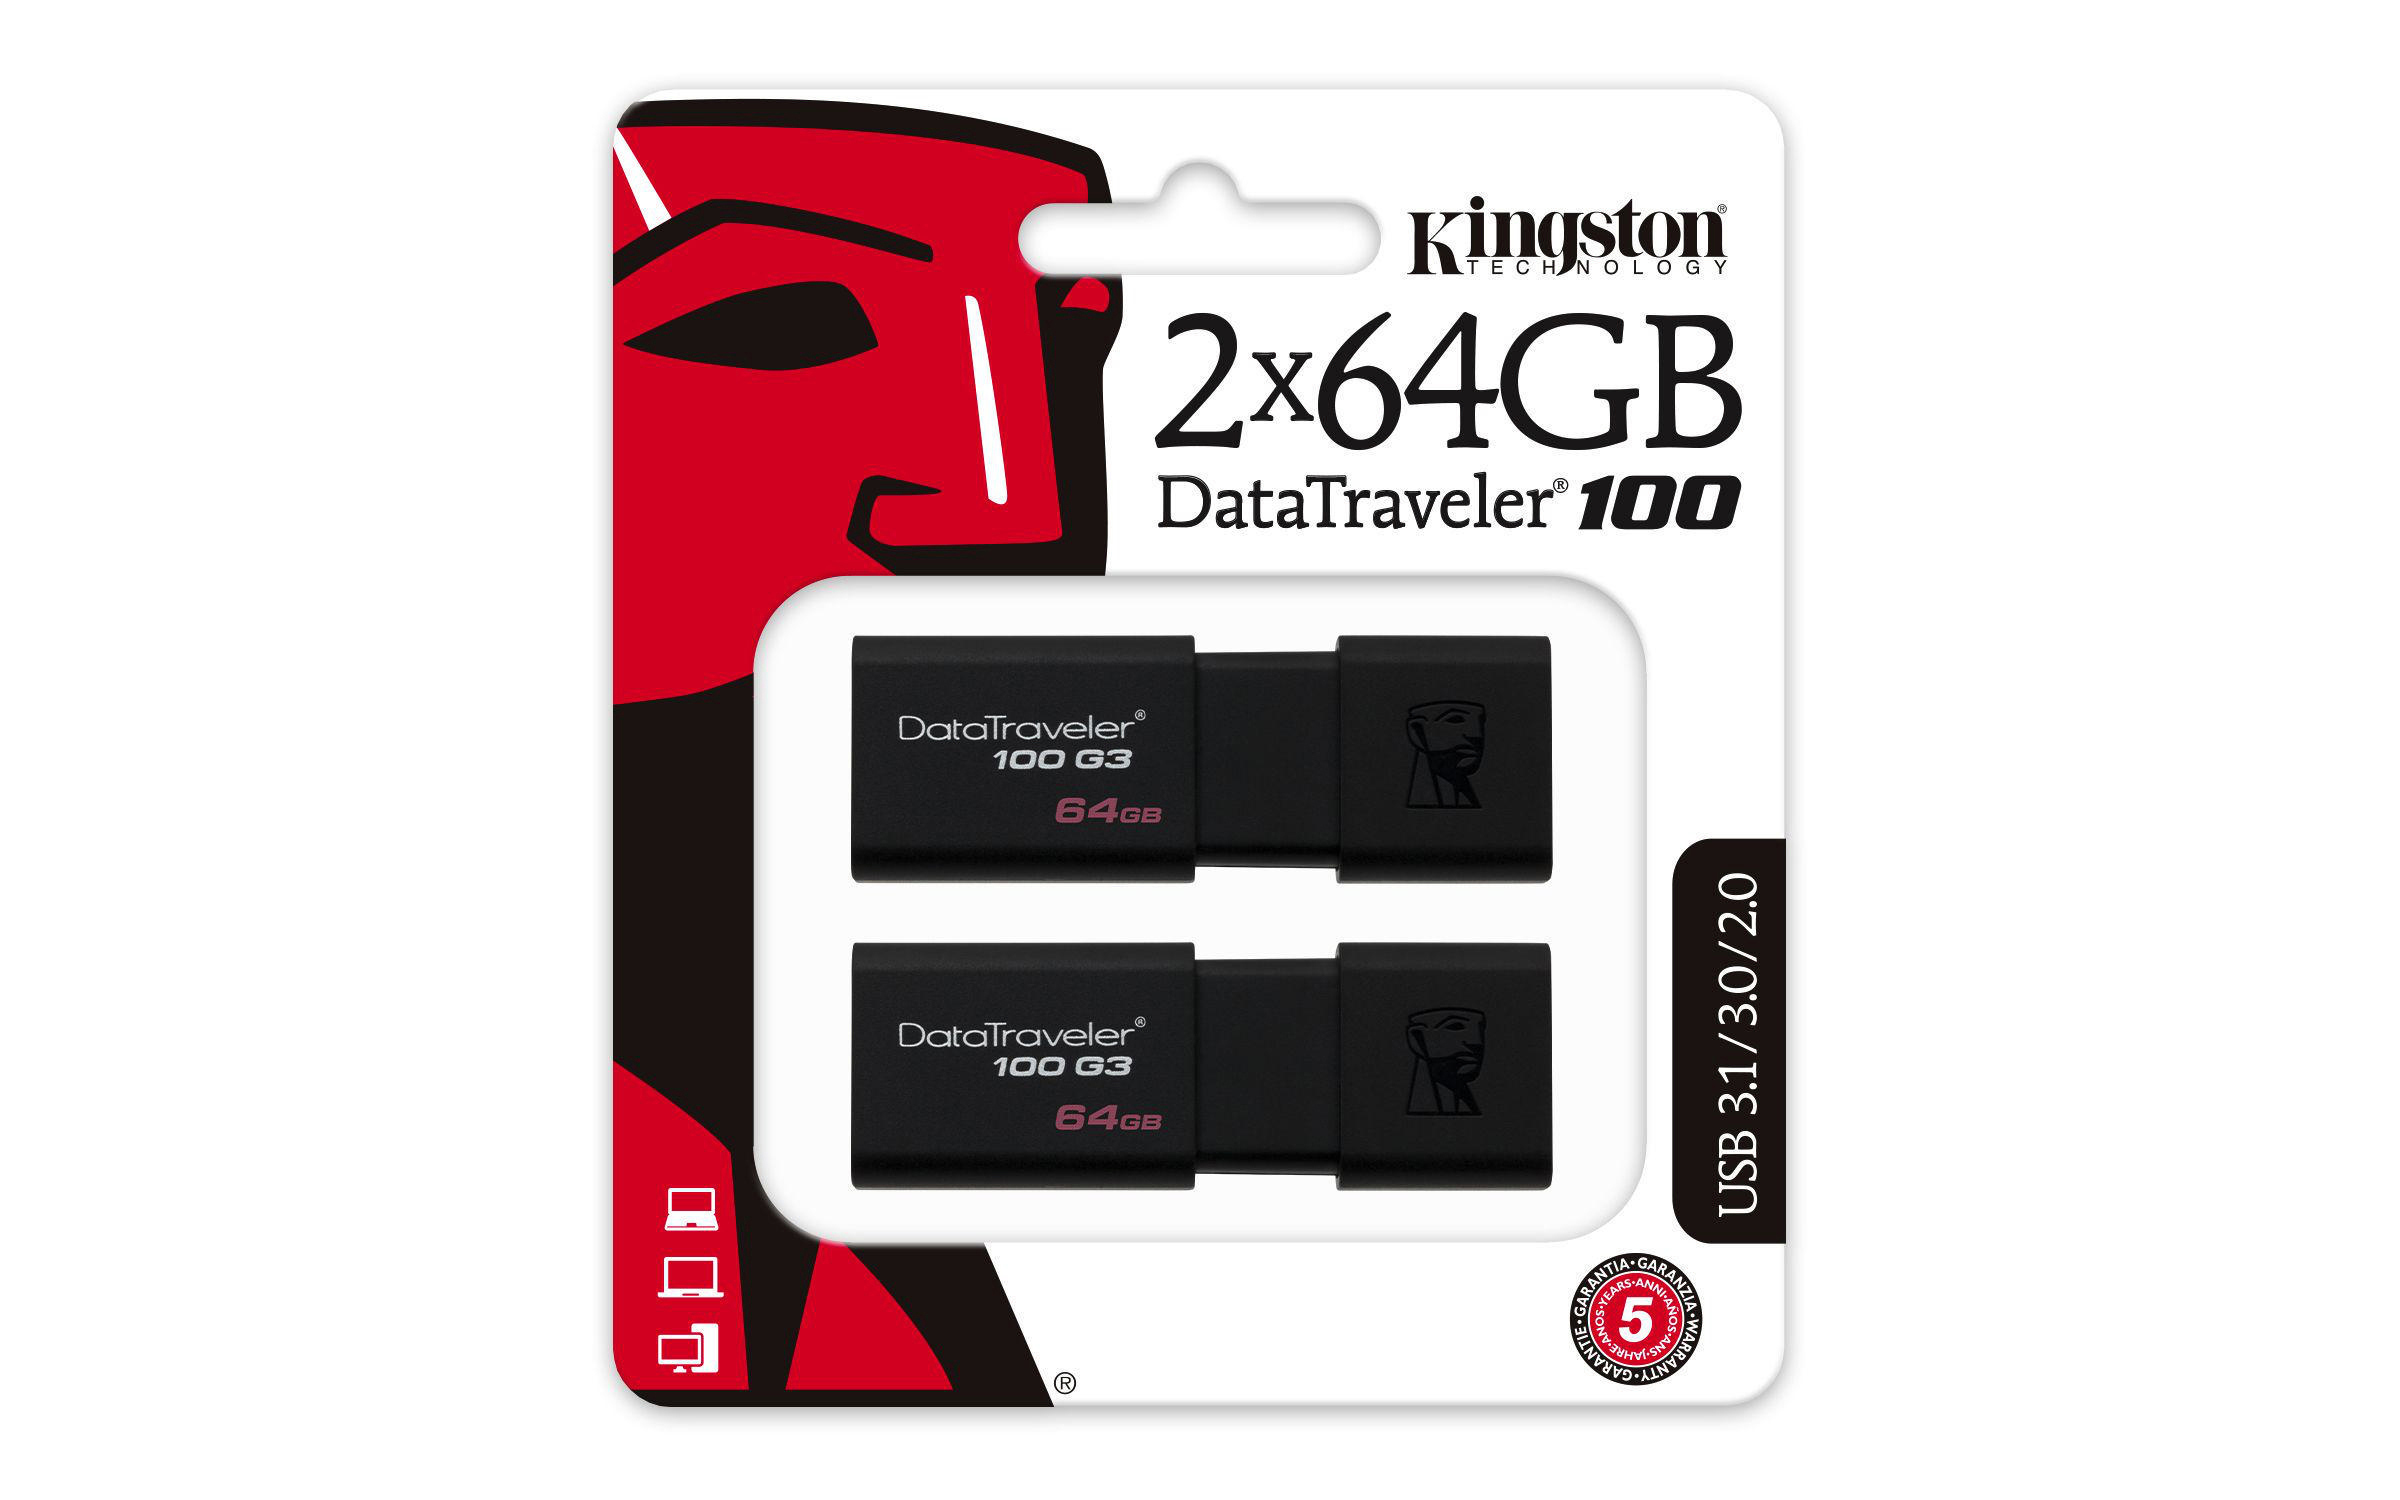 DT100G3 100 64 Sschwarz MB/s, 2er KINGSTON USB Stick, GB, Pack